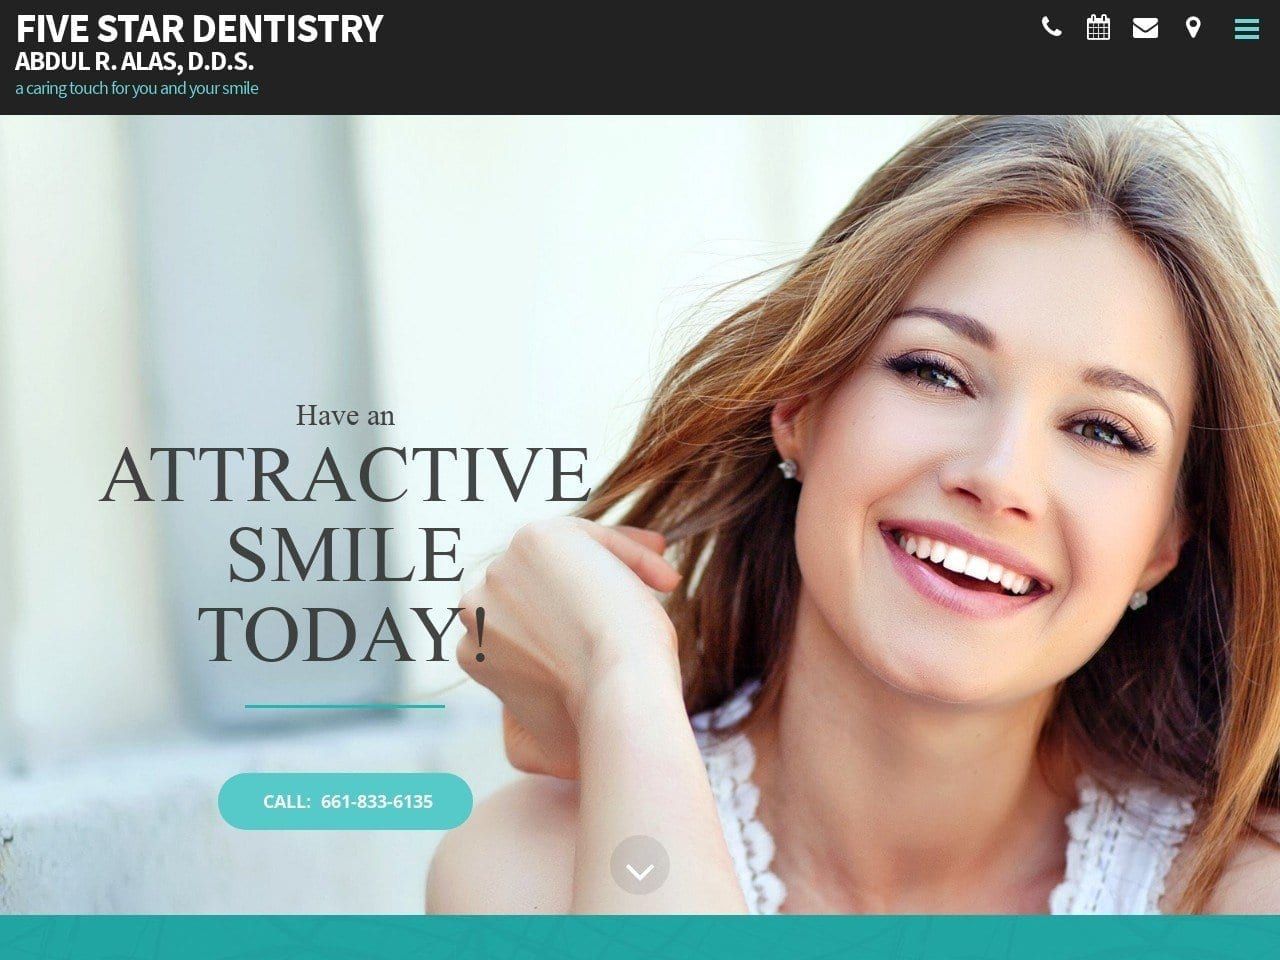 Five Star Dentist Website Screenshot from fivestardentistry.com